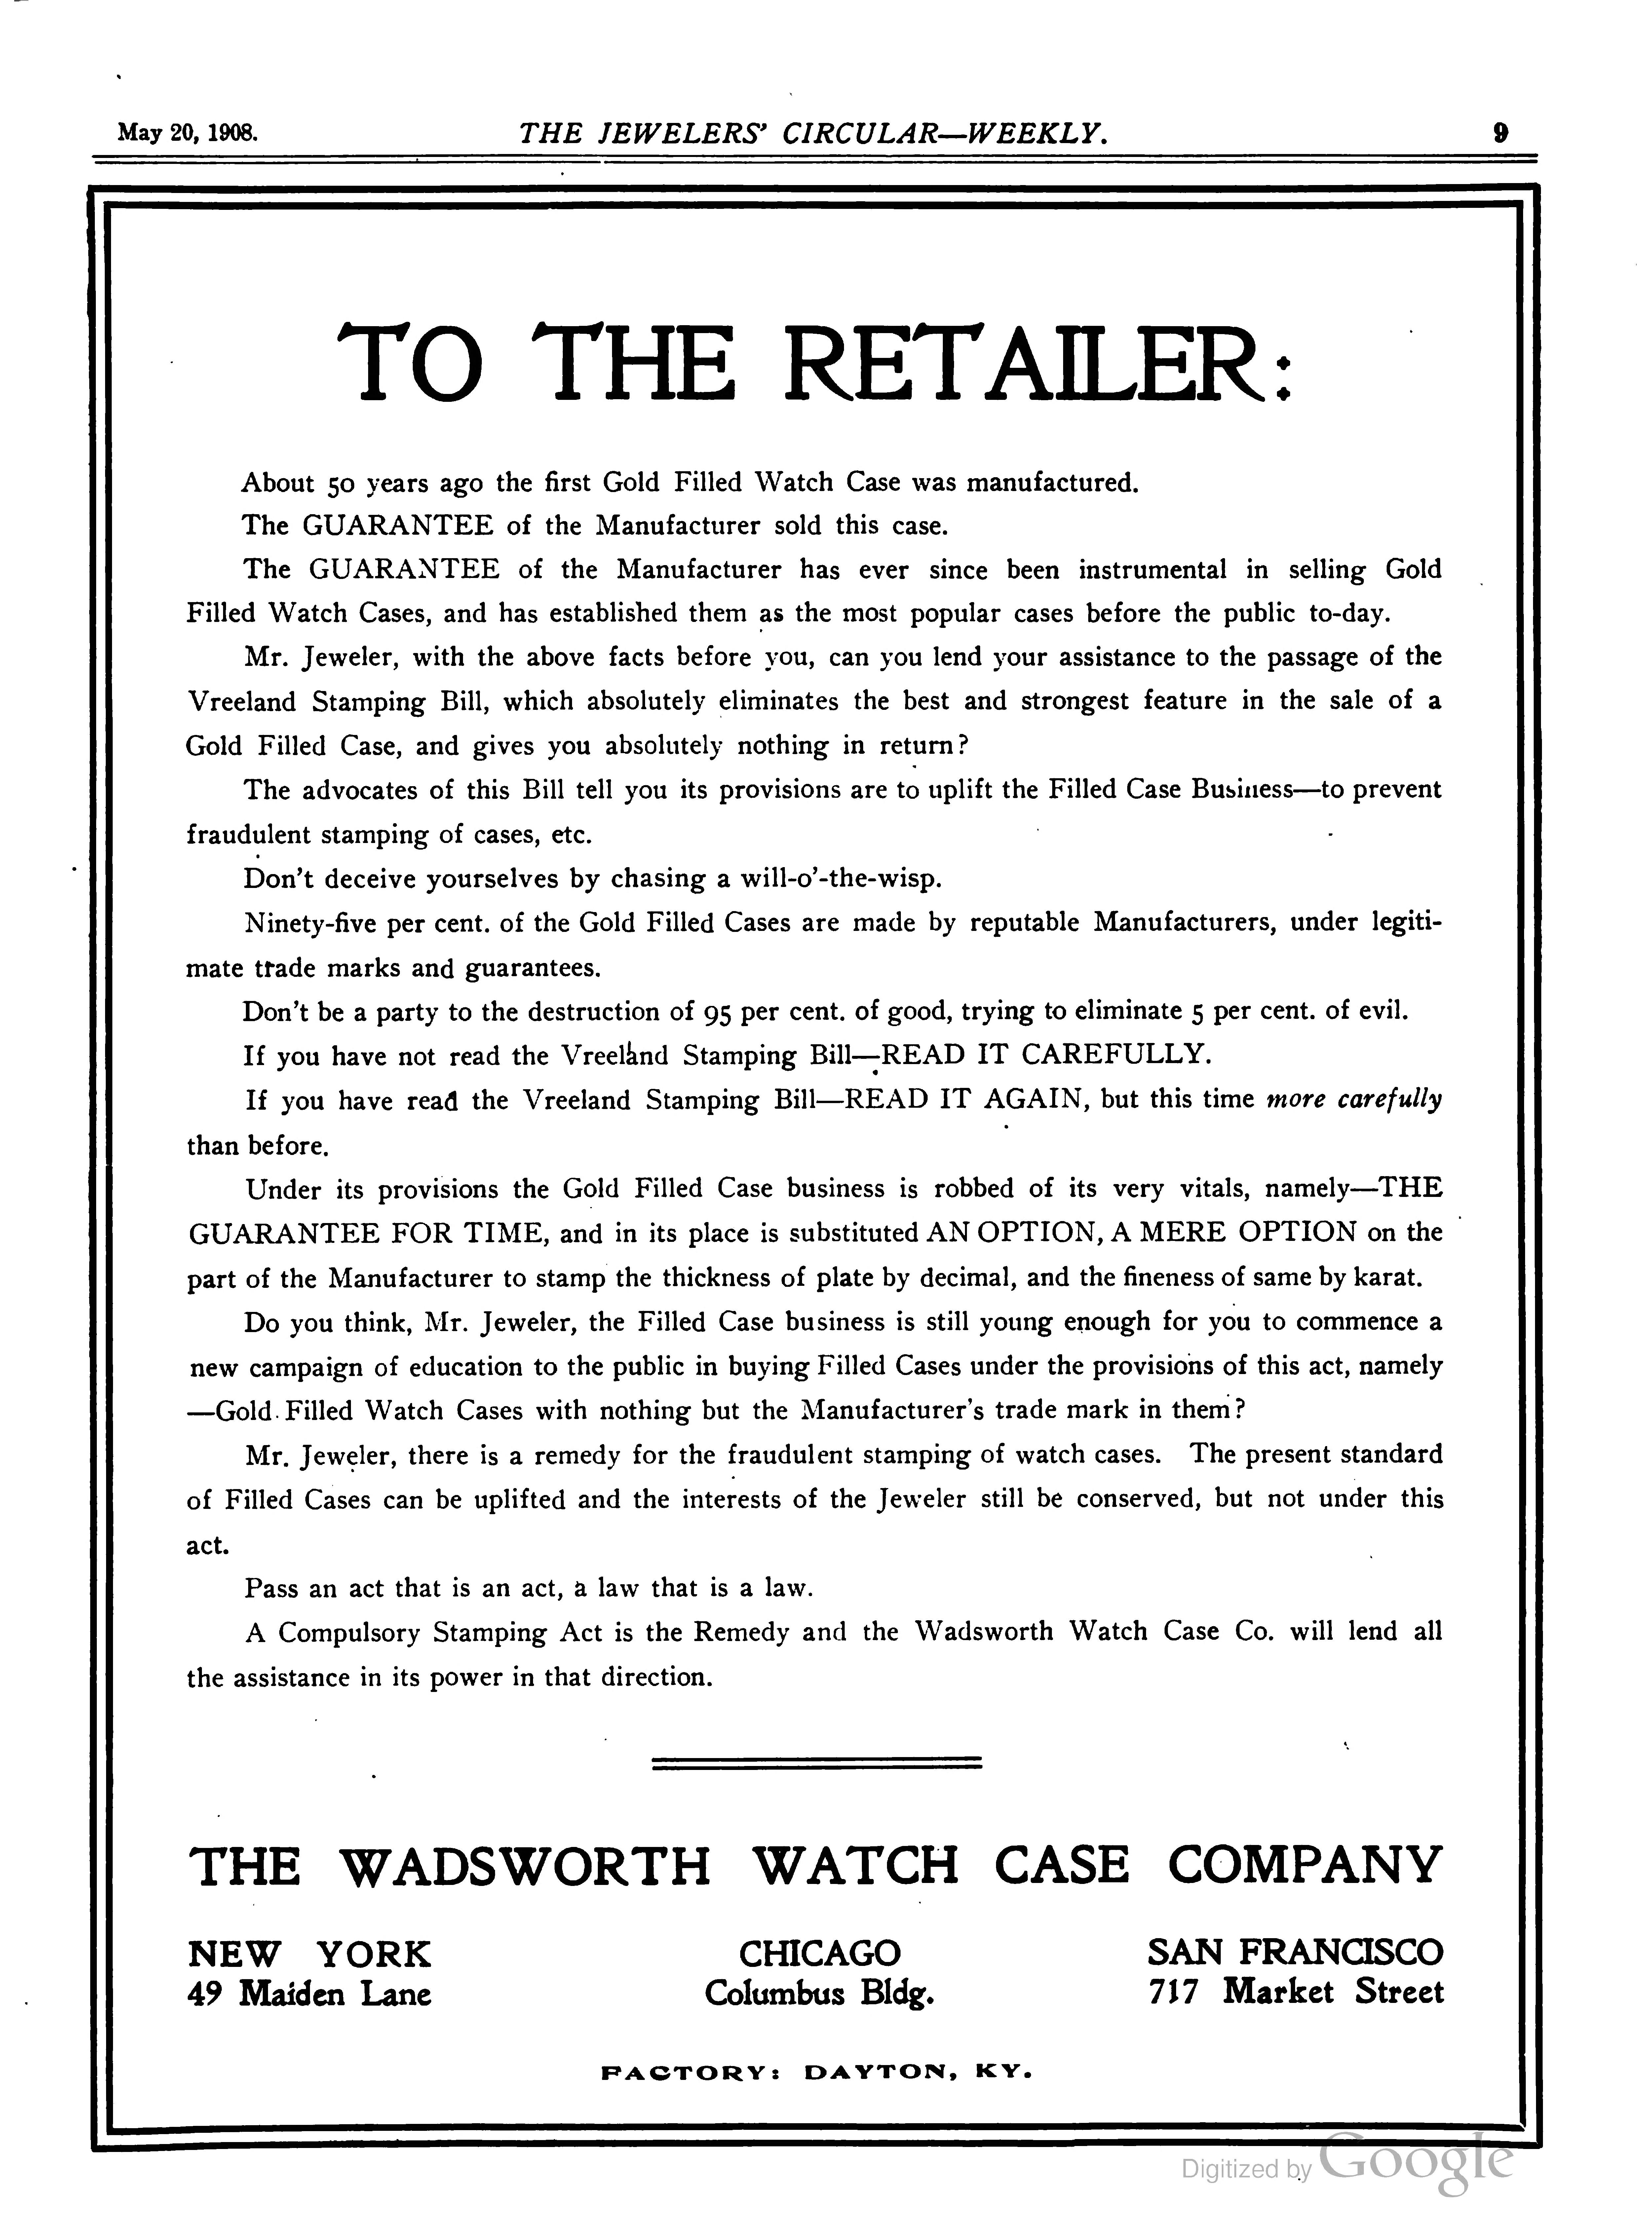 Wadsworth 1908 0.jpg